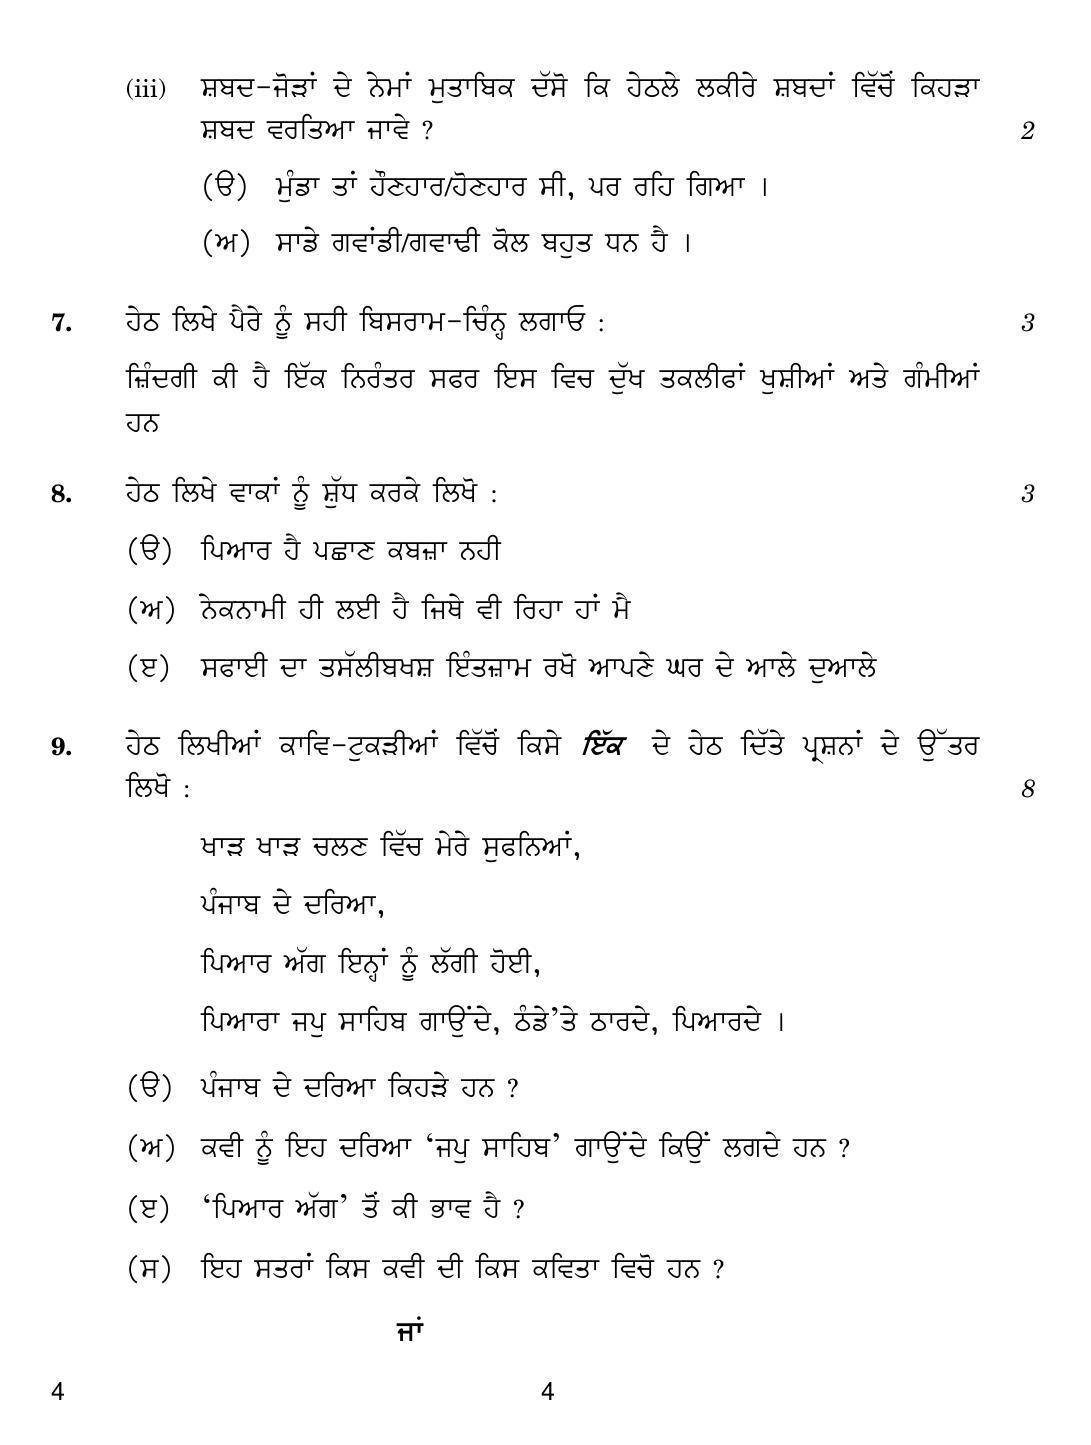 CBSE Class 12 4 Punjabi 2019 Compartment Question Paper - Page 4